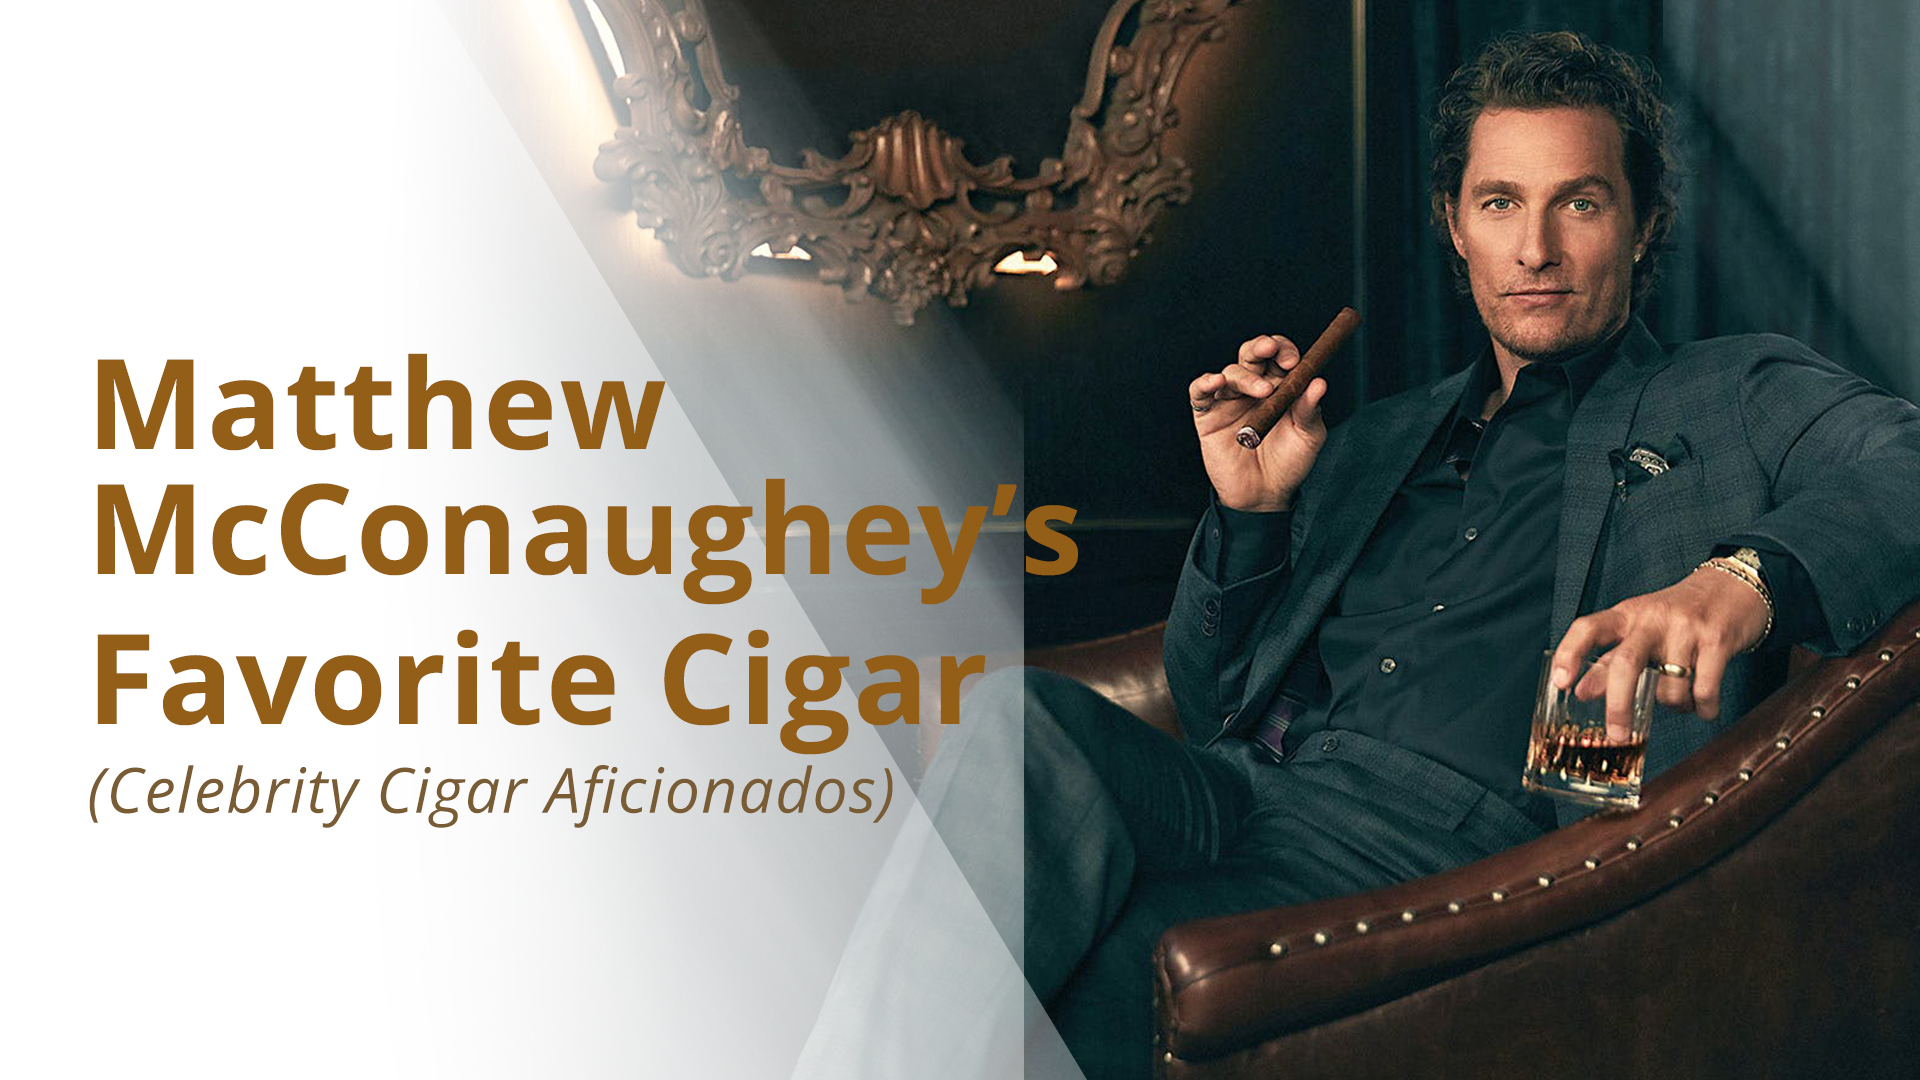 Matthew McConaughey's favorite cigar